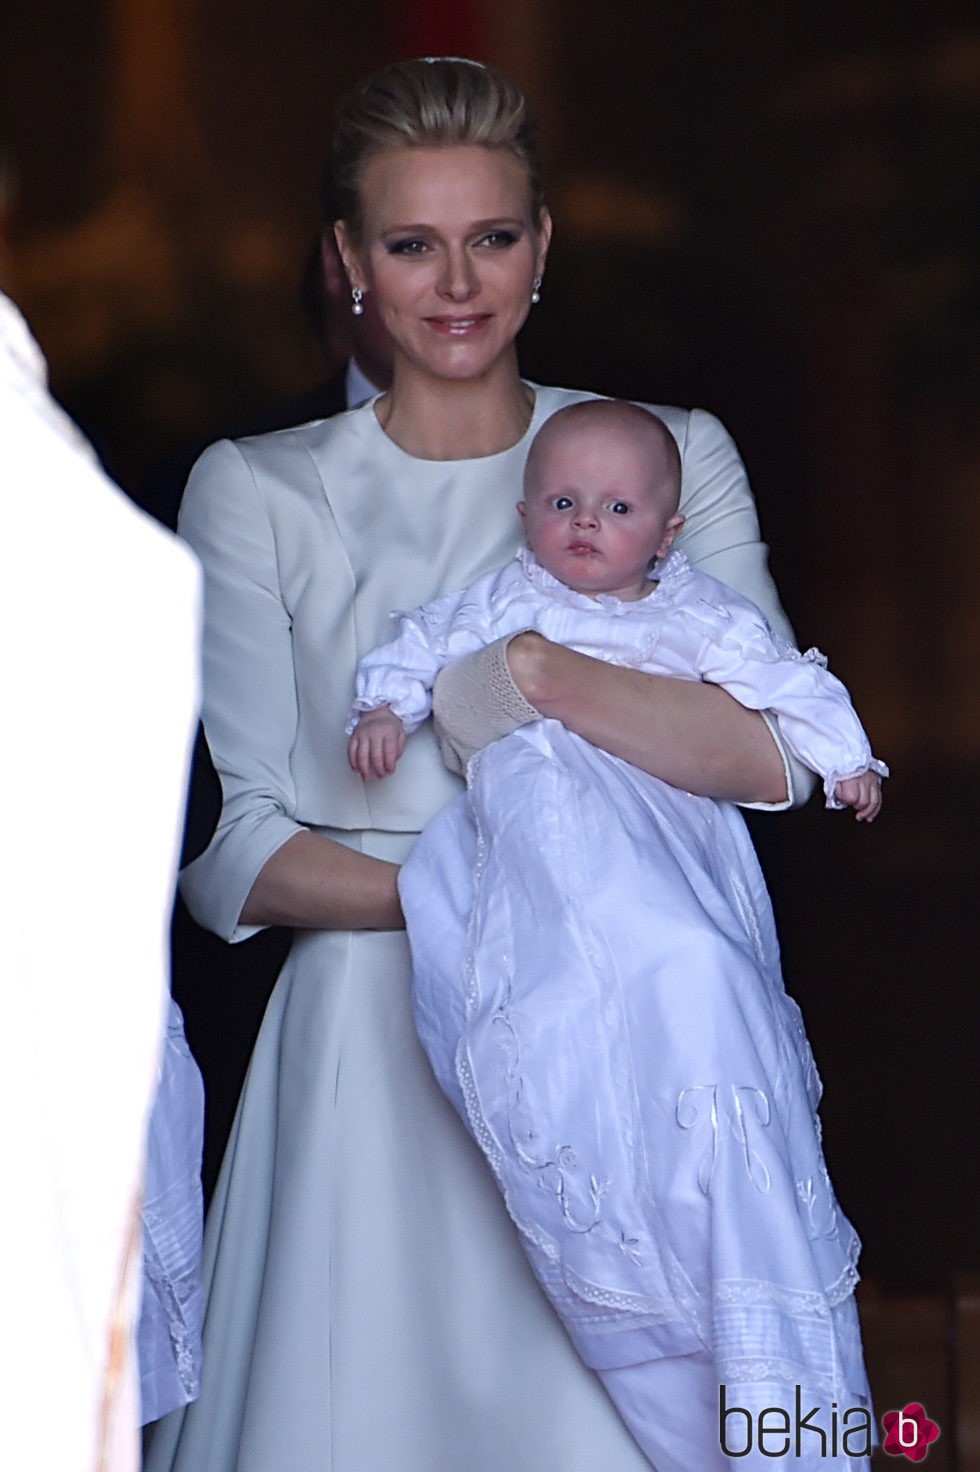 Jacques de Mónaco en brazos de la Princesa Charlene en su bautizo